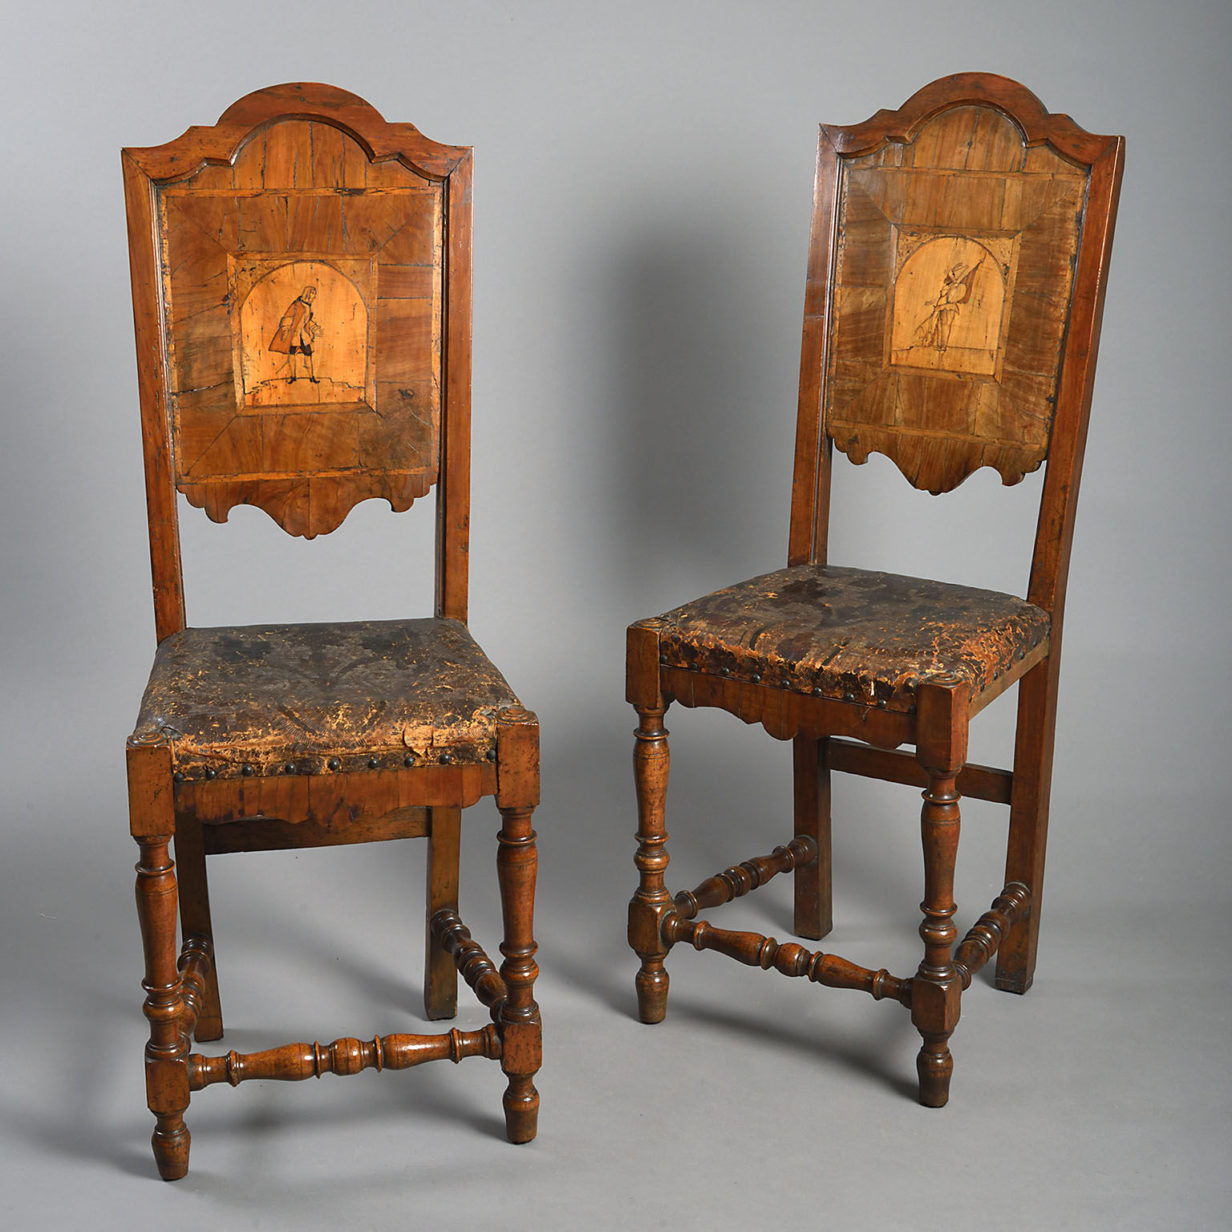 Pair of 18th century walnut commedia del arte chairs